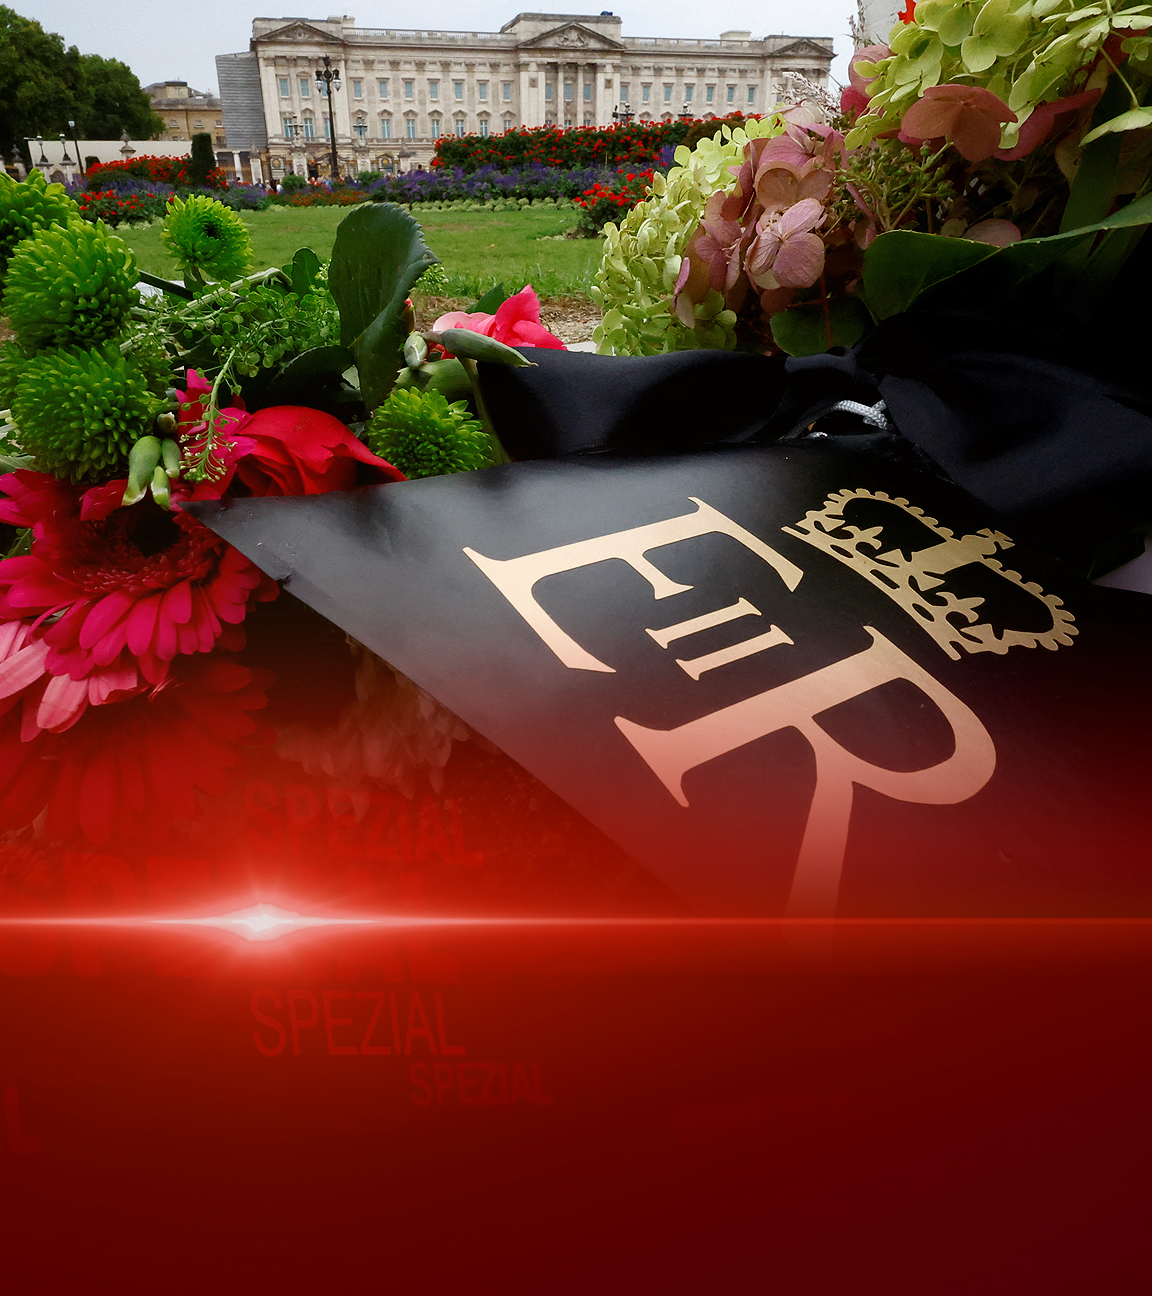 ZDF spezial: Buckingham Palace - Trauer in London